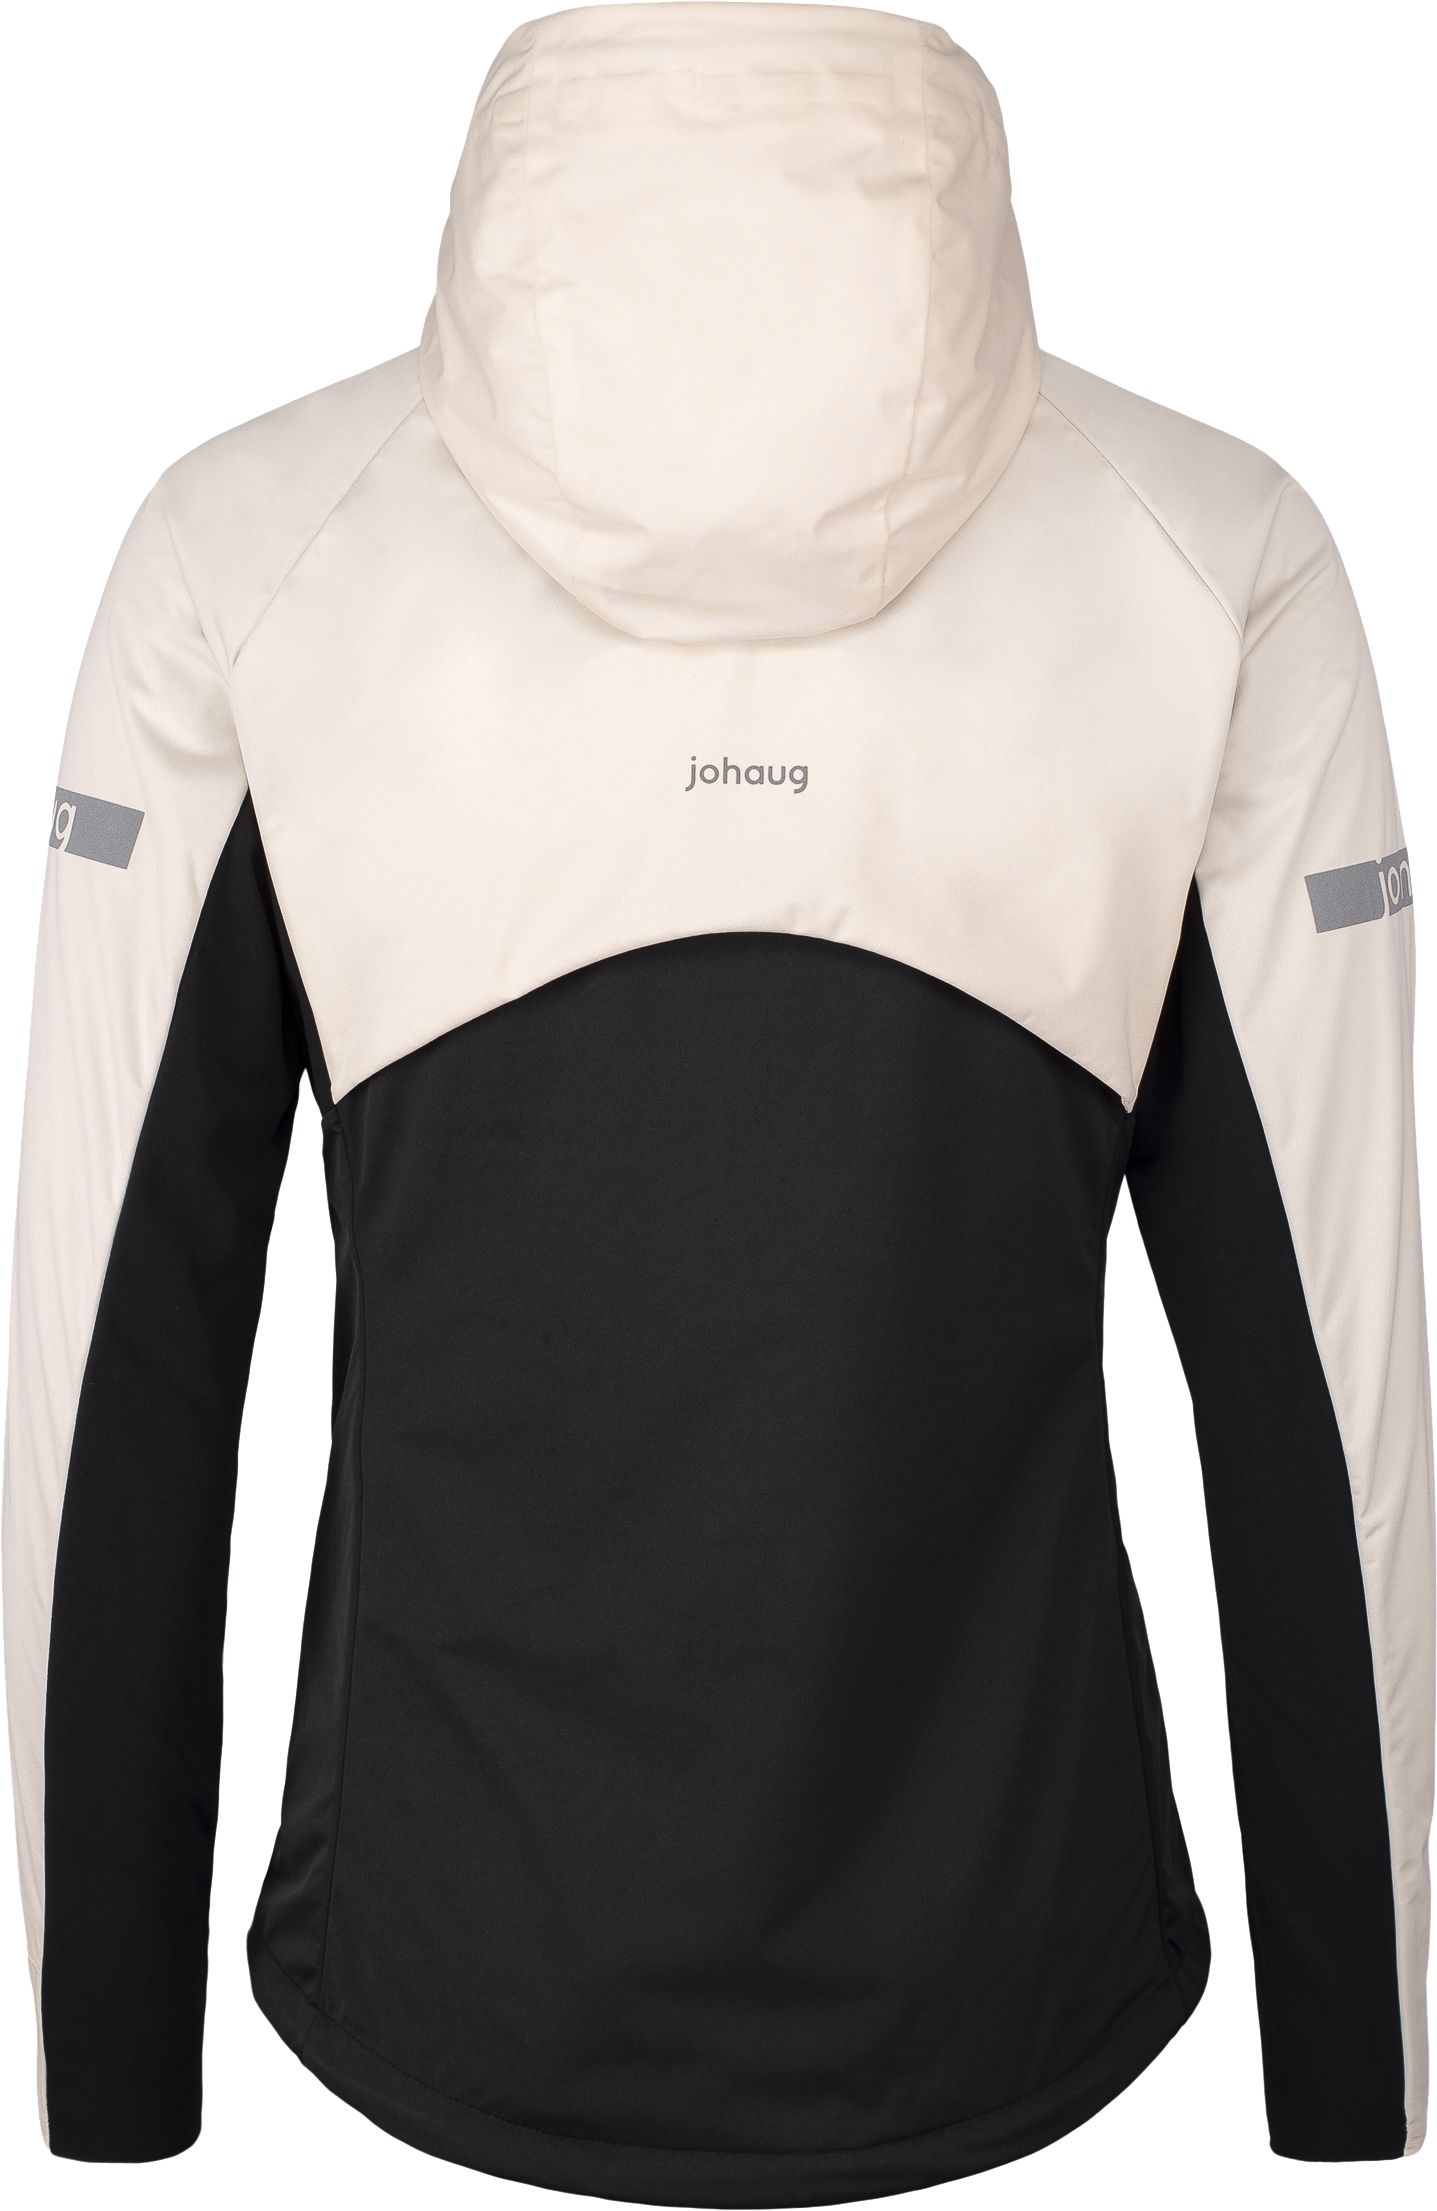 JOHAUG, W Concept Jacket 2.0